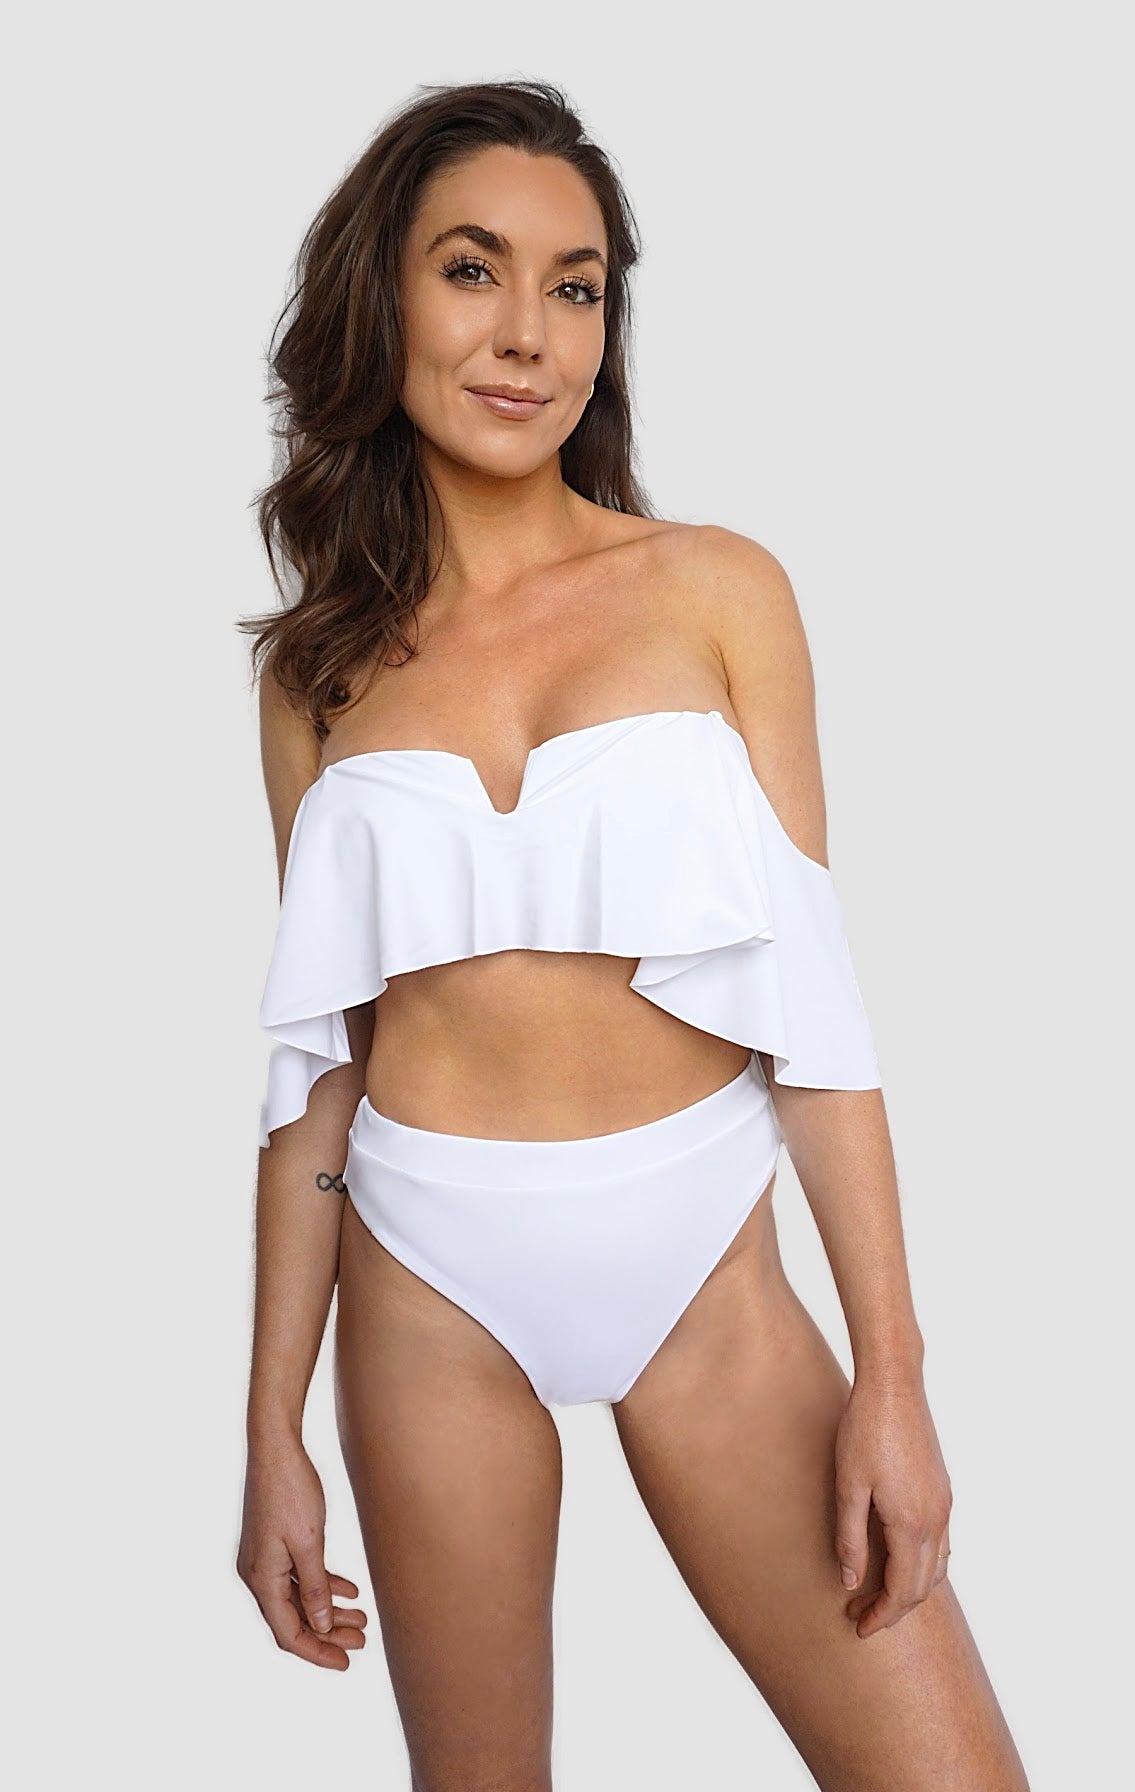 Carling Liski wears Canadian swimwear brand Prairie Swim white fluttery strapless bikini top